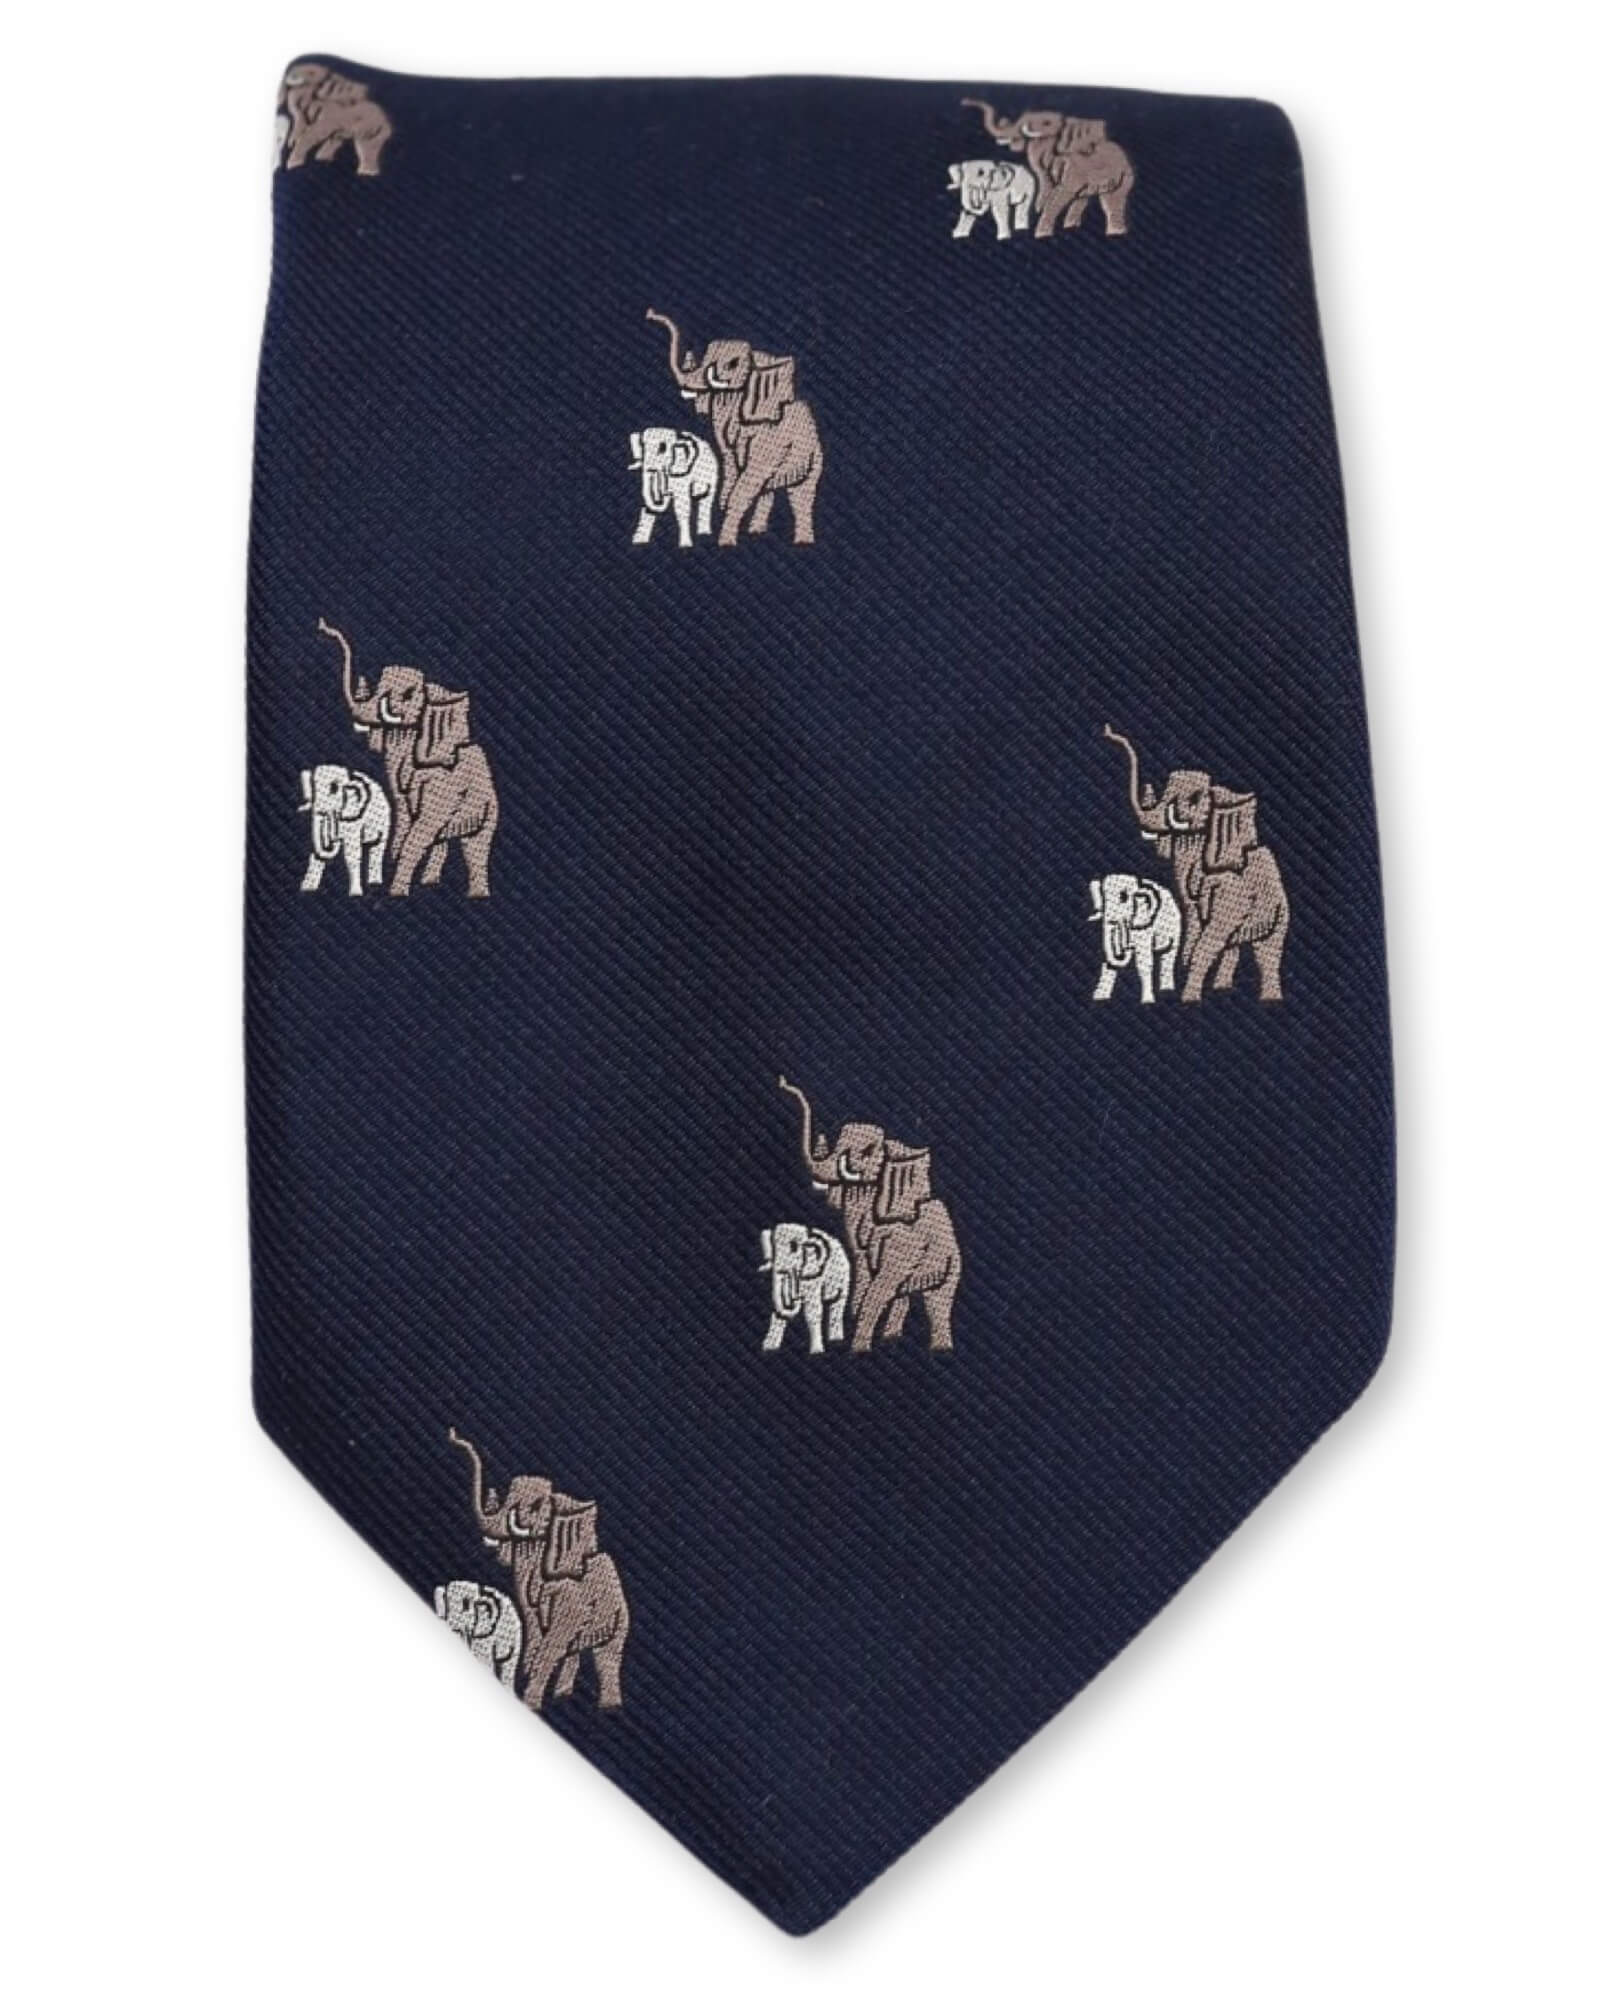 DÉCLIC Elephant Trumpeting Theme Tie - Navy